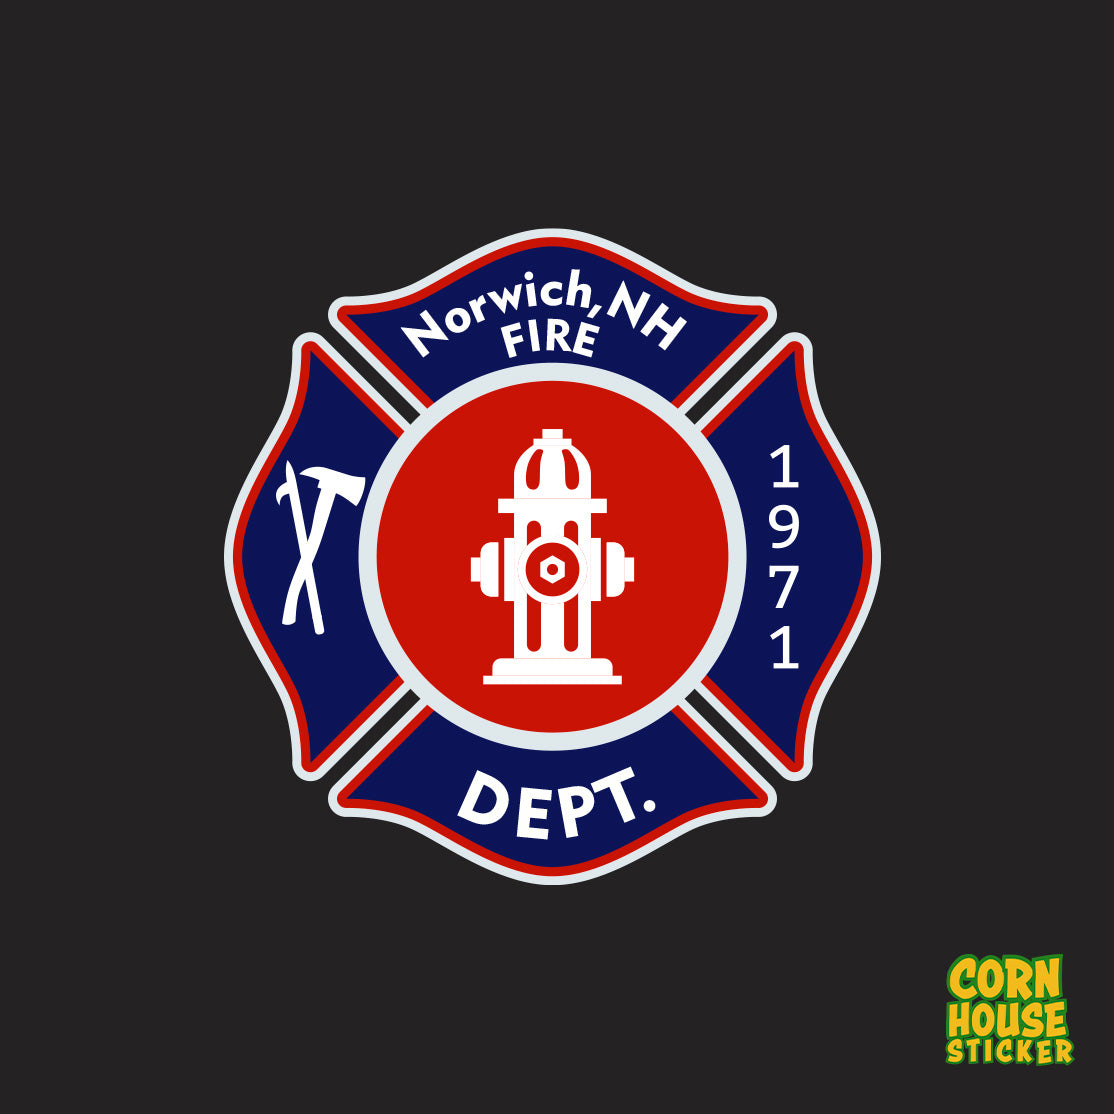 Custom Fire Department stickers